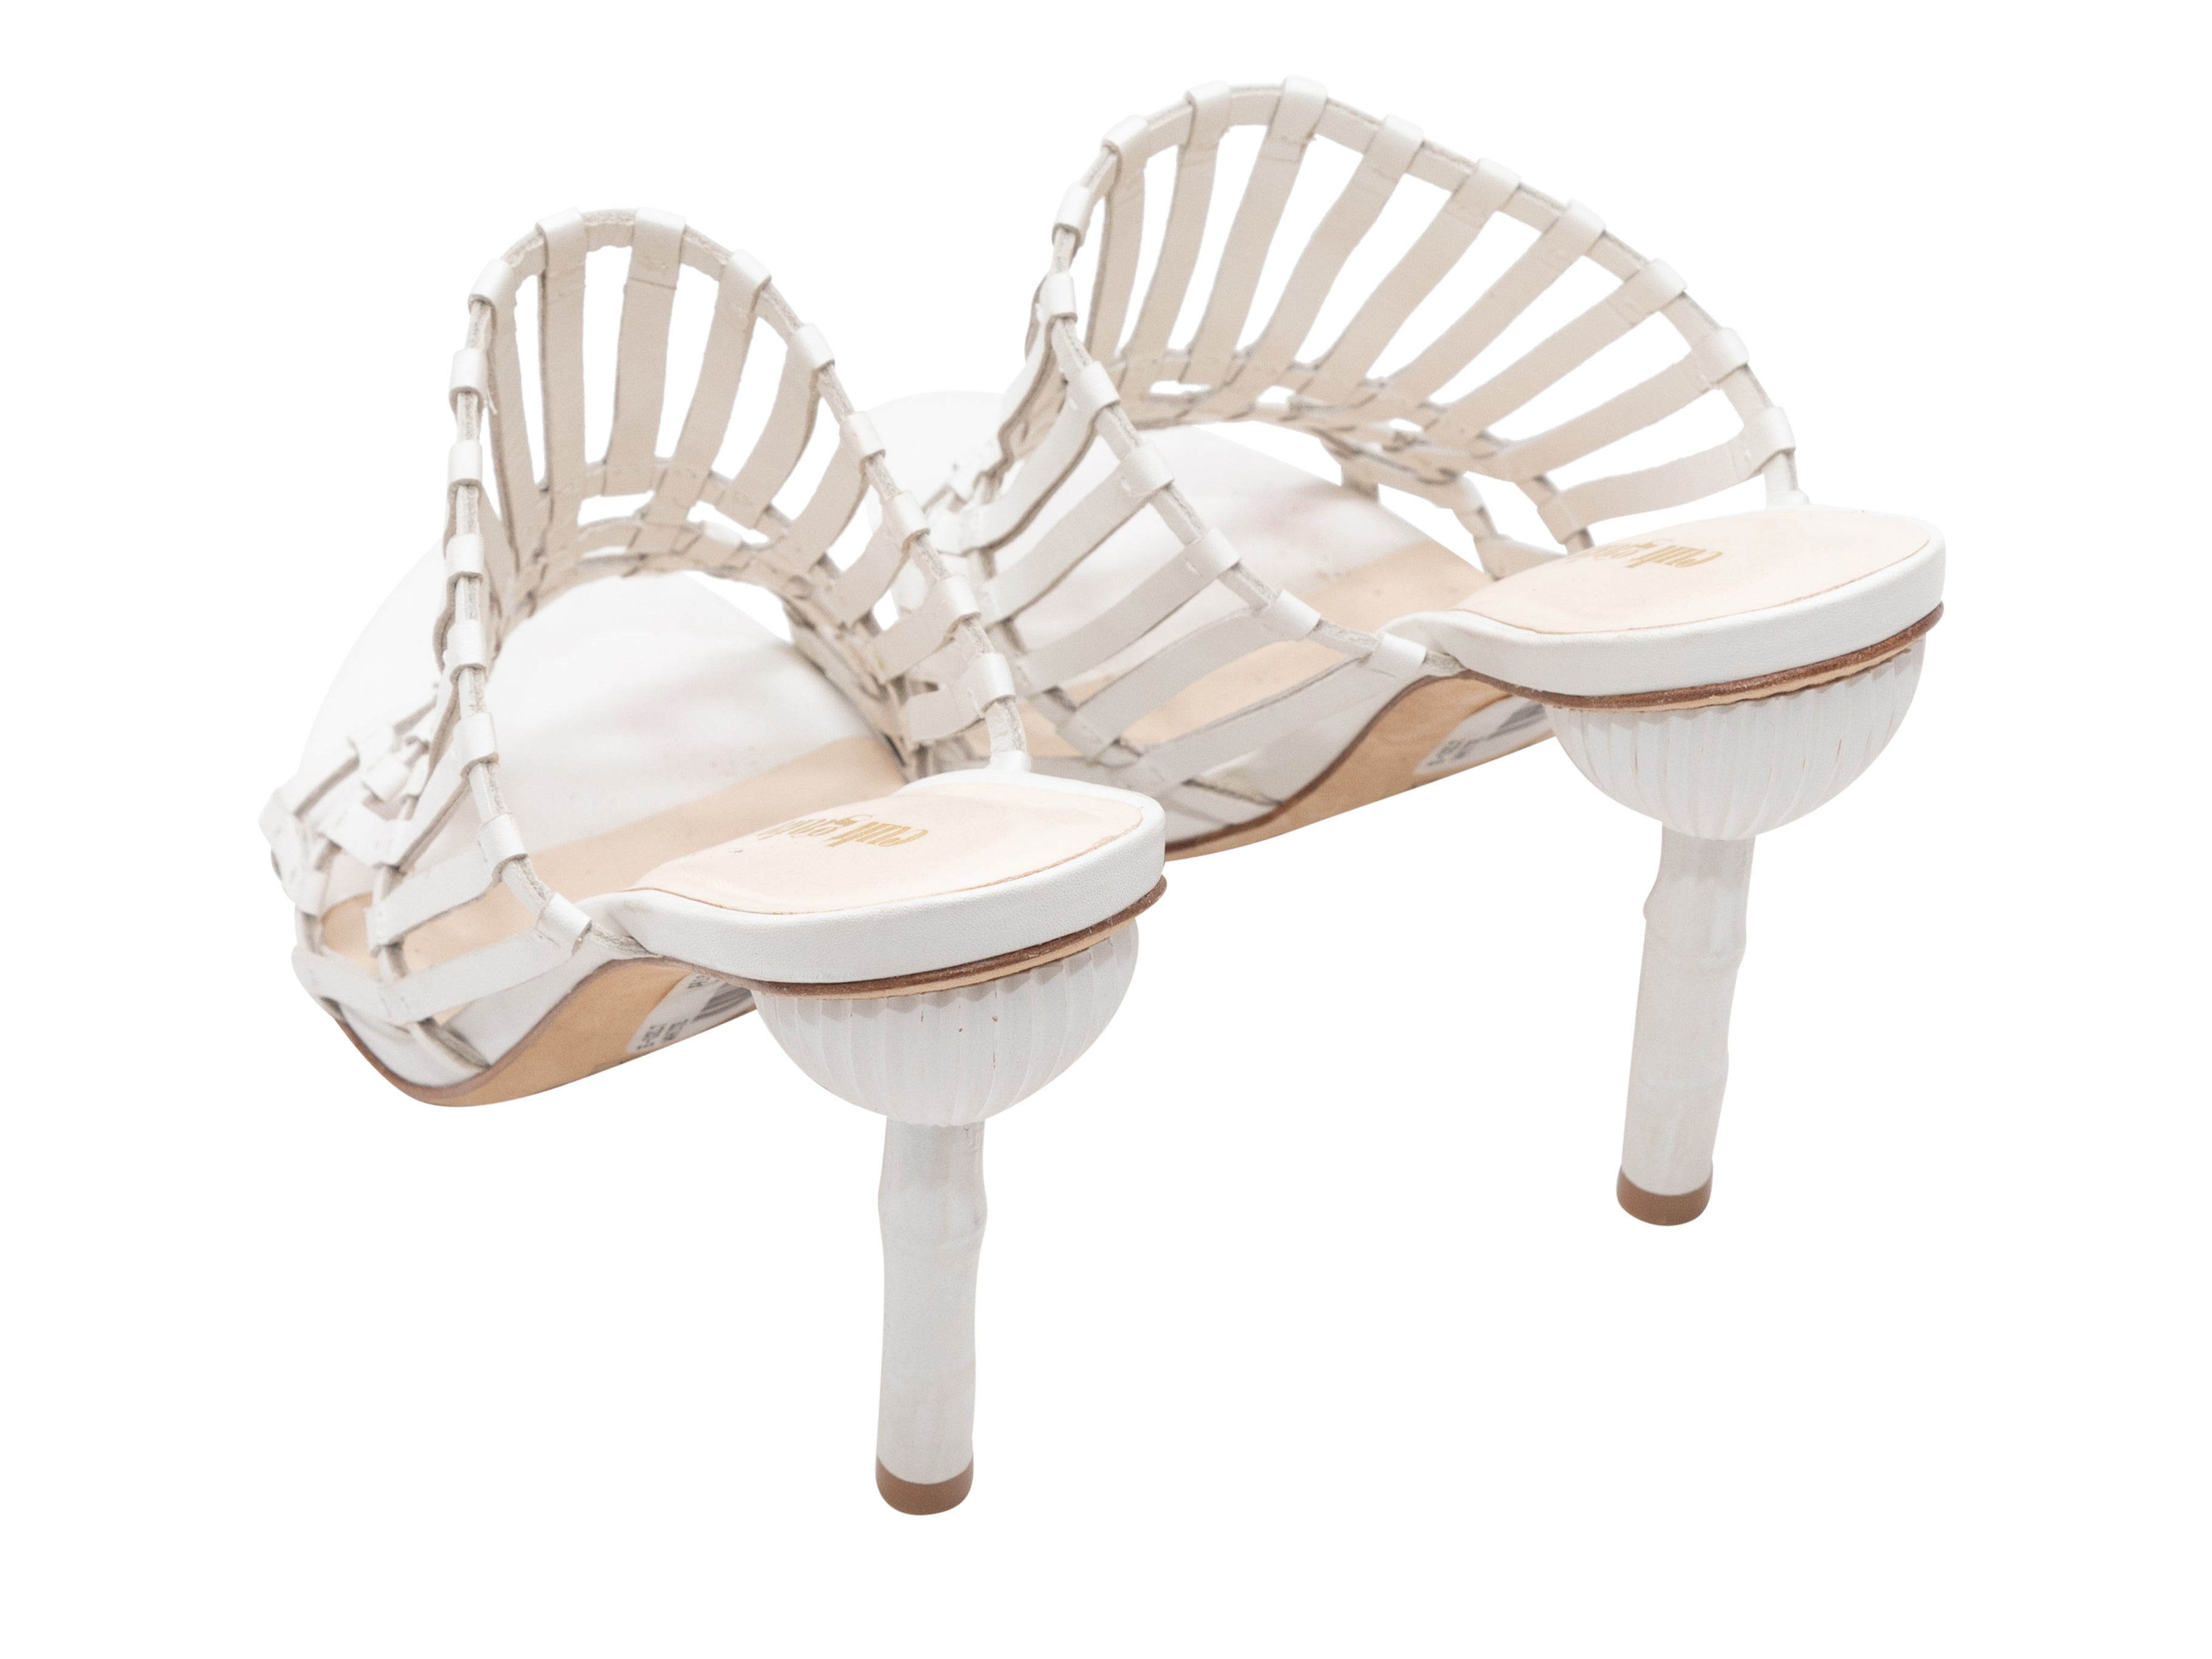 White Cult Gaia Ark Leather Heeled Sandals Size 38.5 - Designer Revival